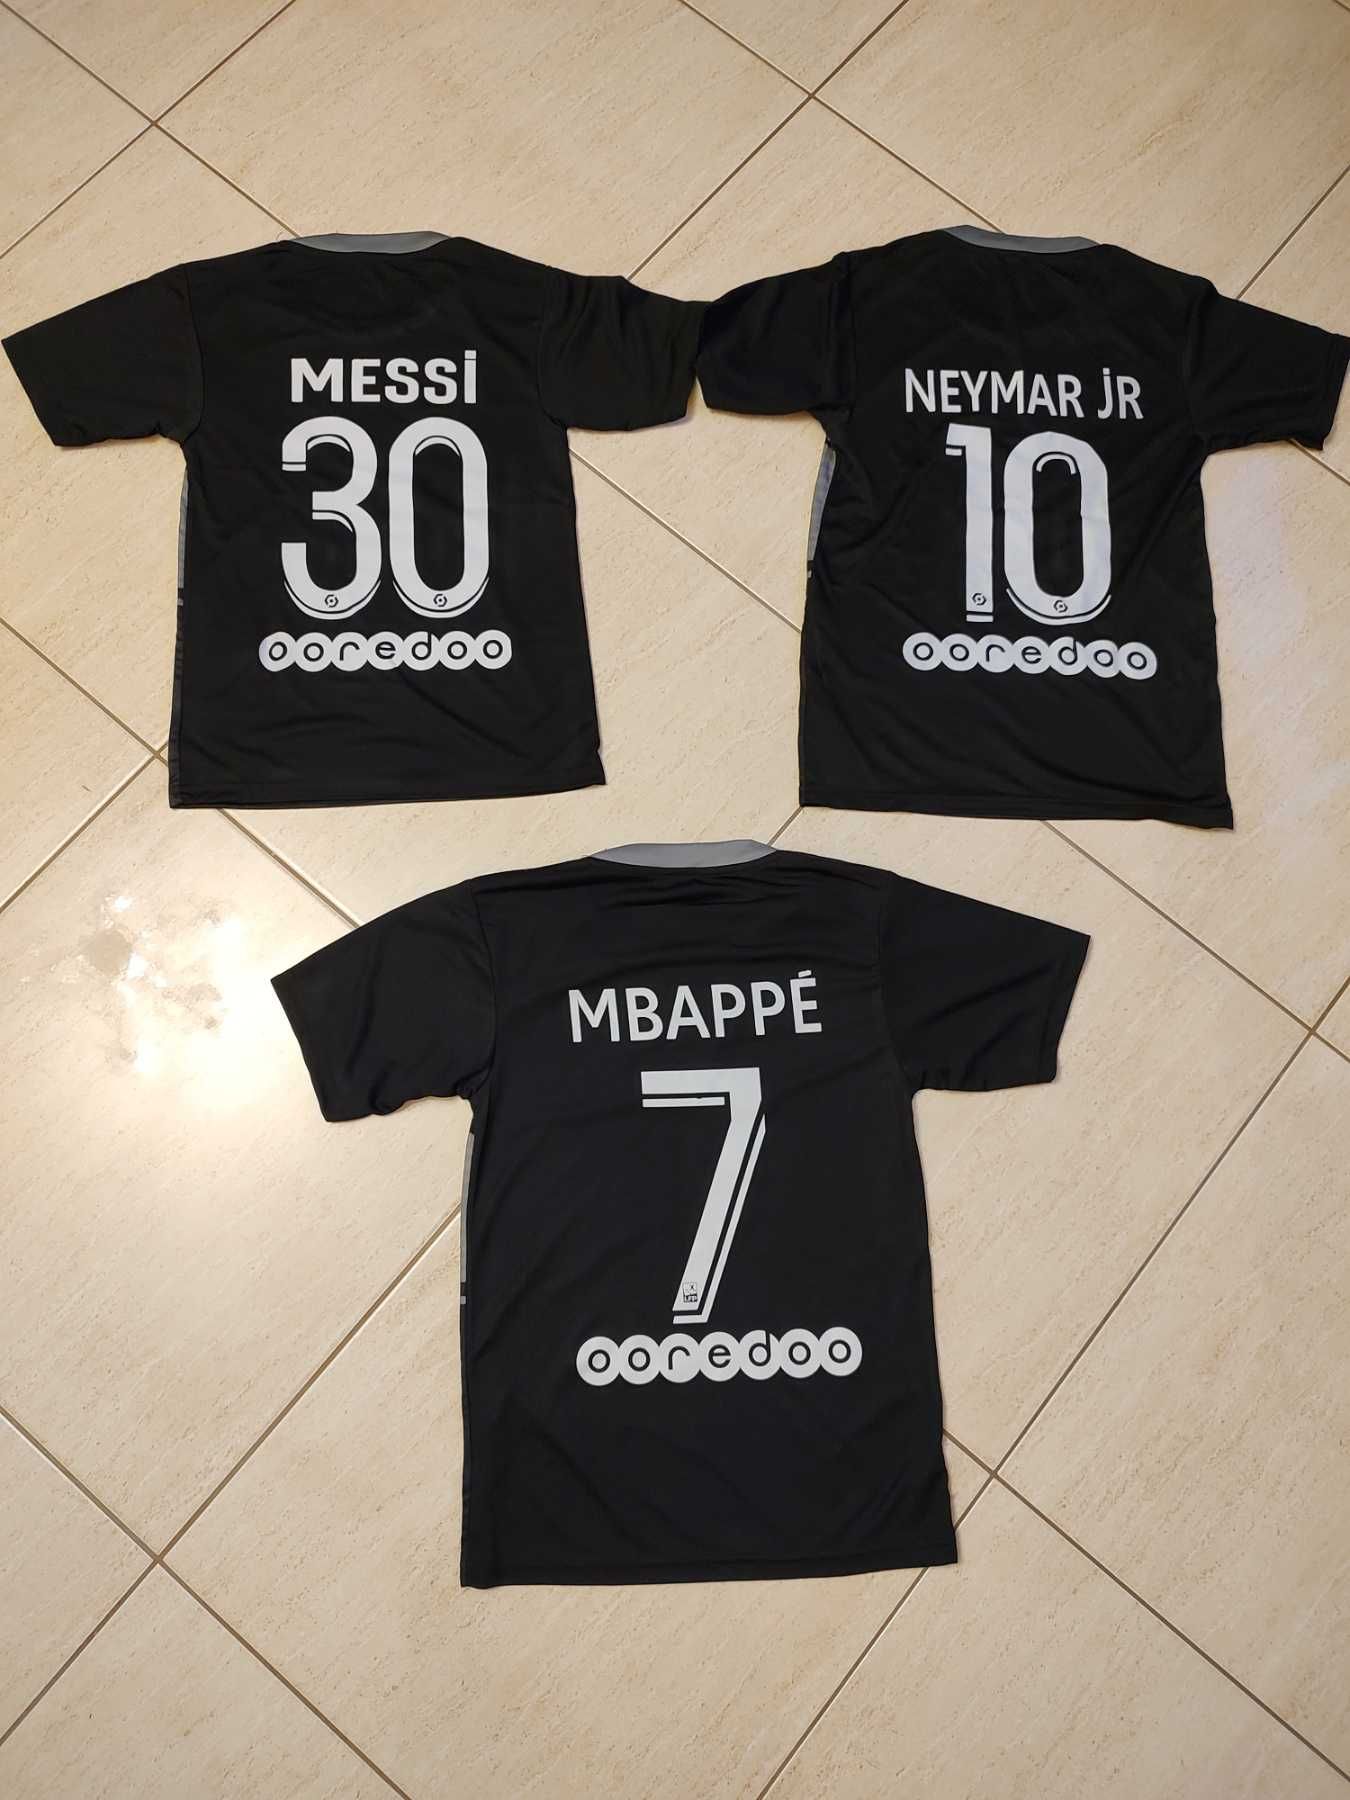 Neymar 10 + Калци PSG Black Детски Черен Екип сезон 22 Комплект Неймар